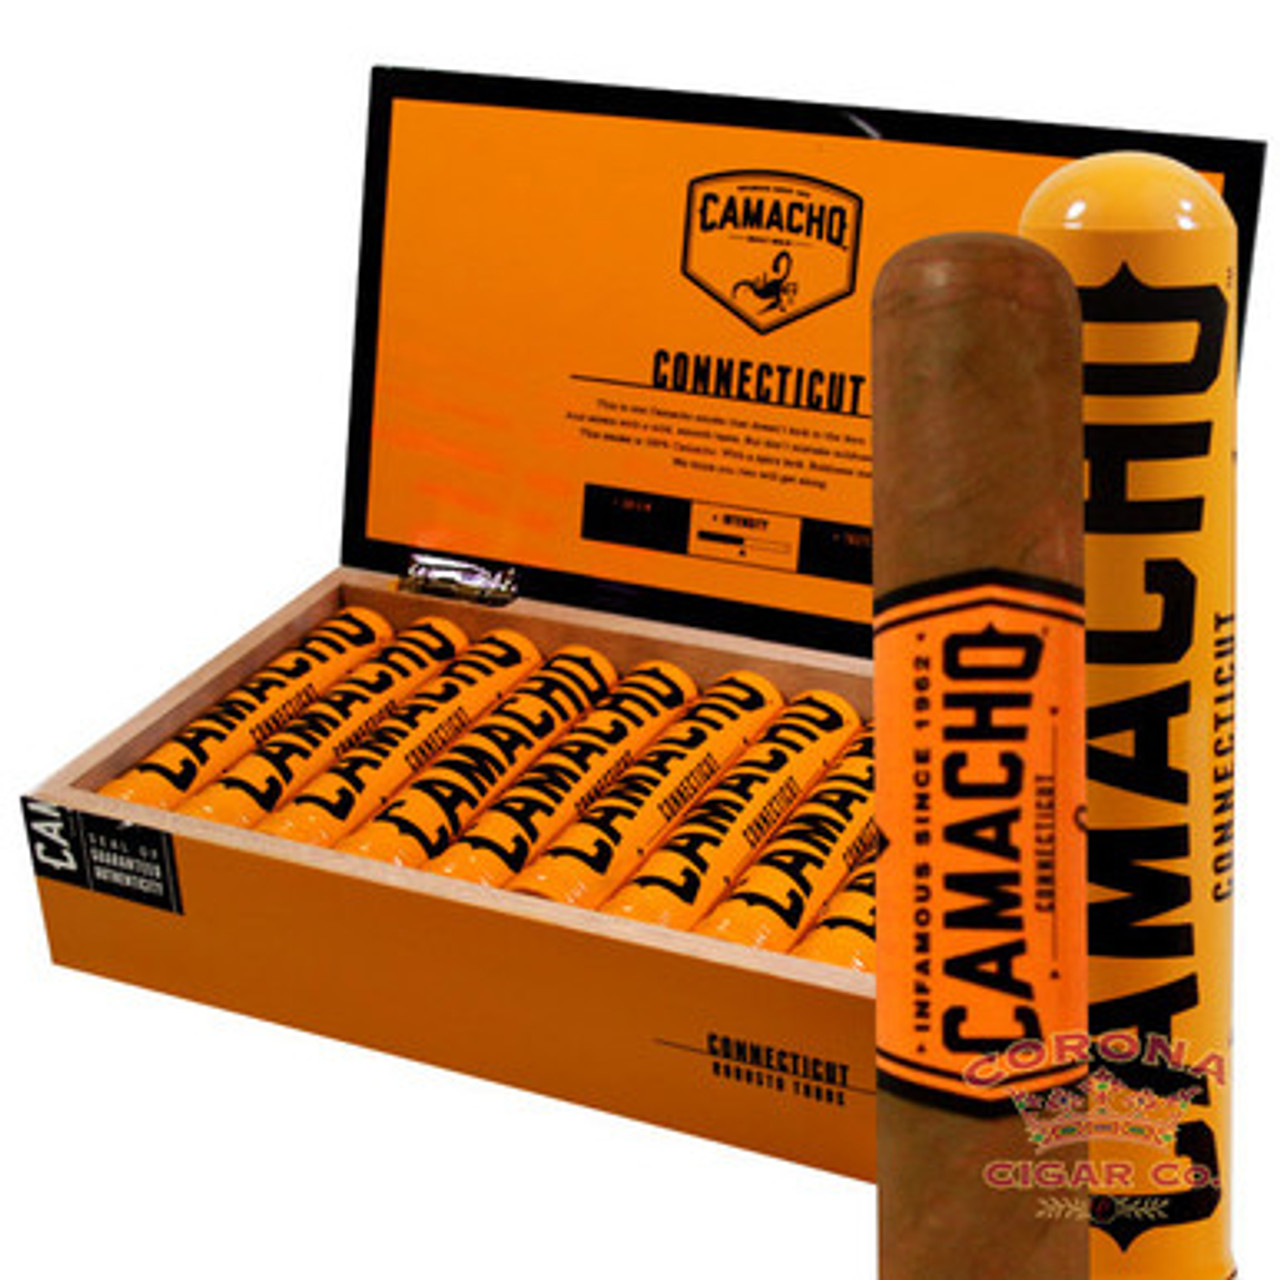  Camacho Robusto Connecticut Empty Wood Cigar Box 8.5